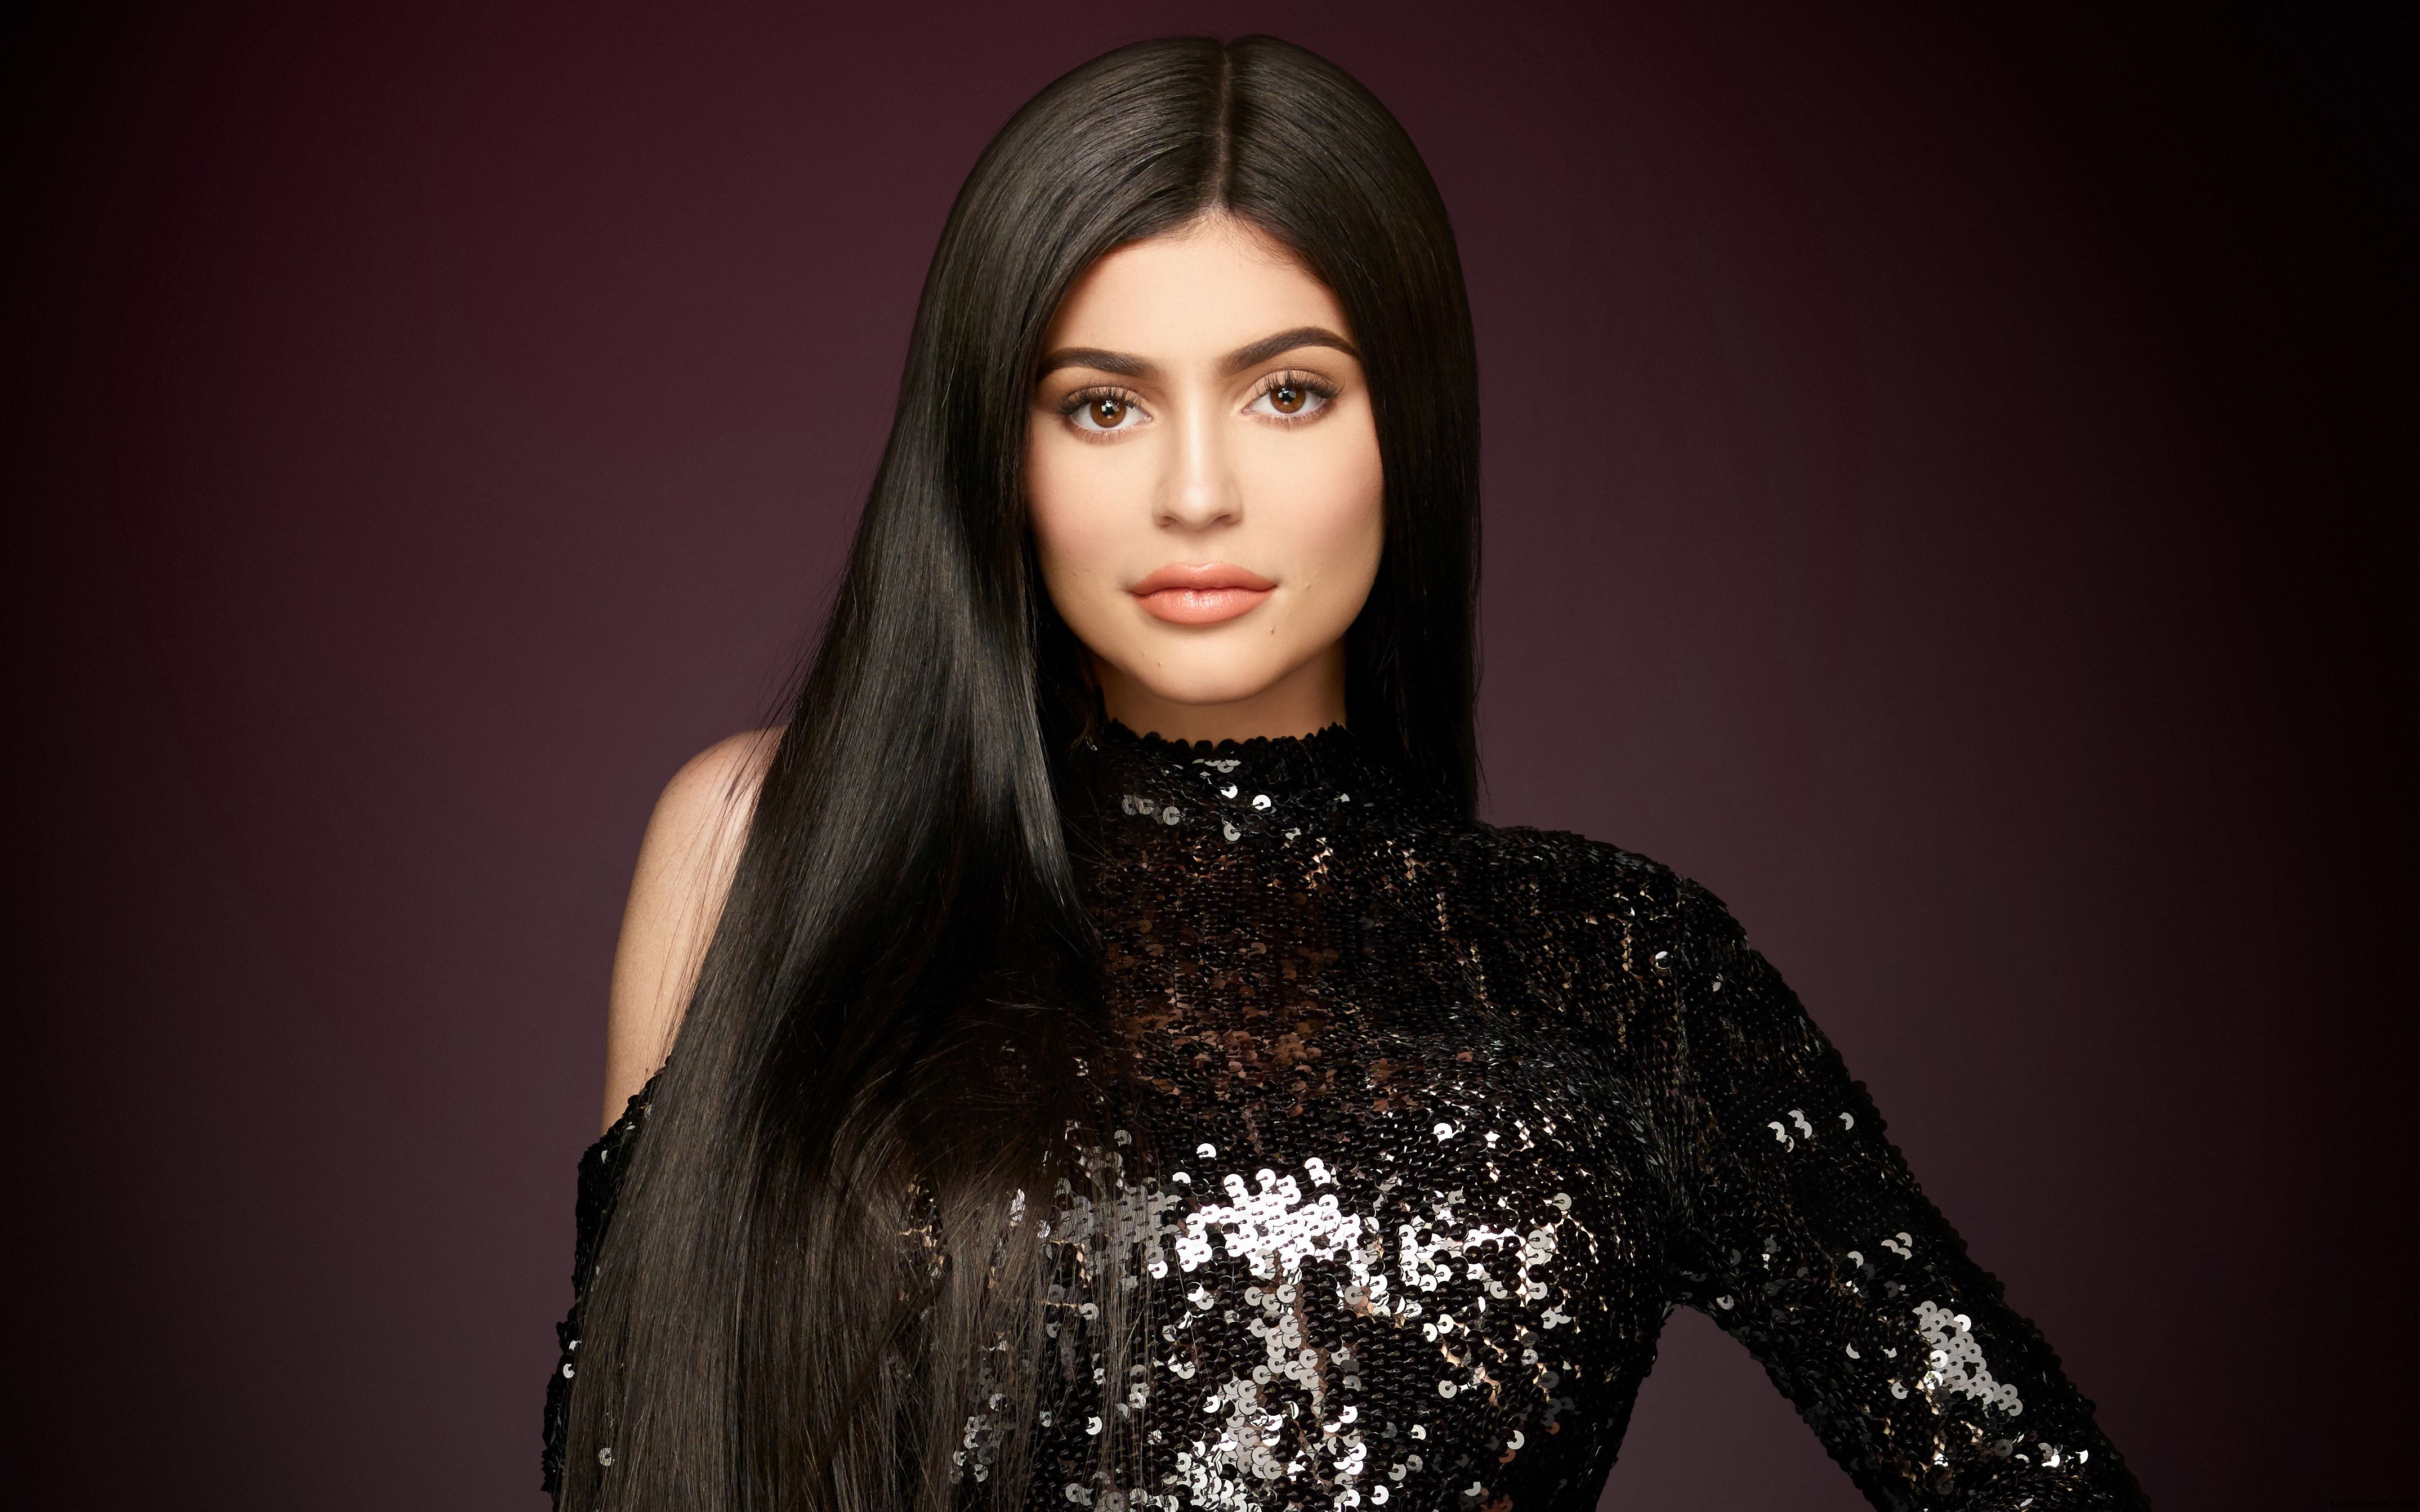 Kylie Jenner Celebrity Wide Wallpaper 62548 4298x2686 px